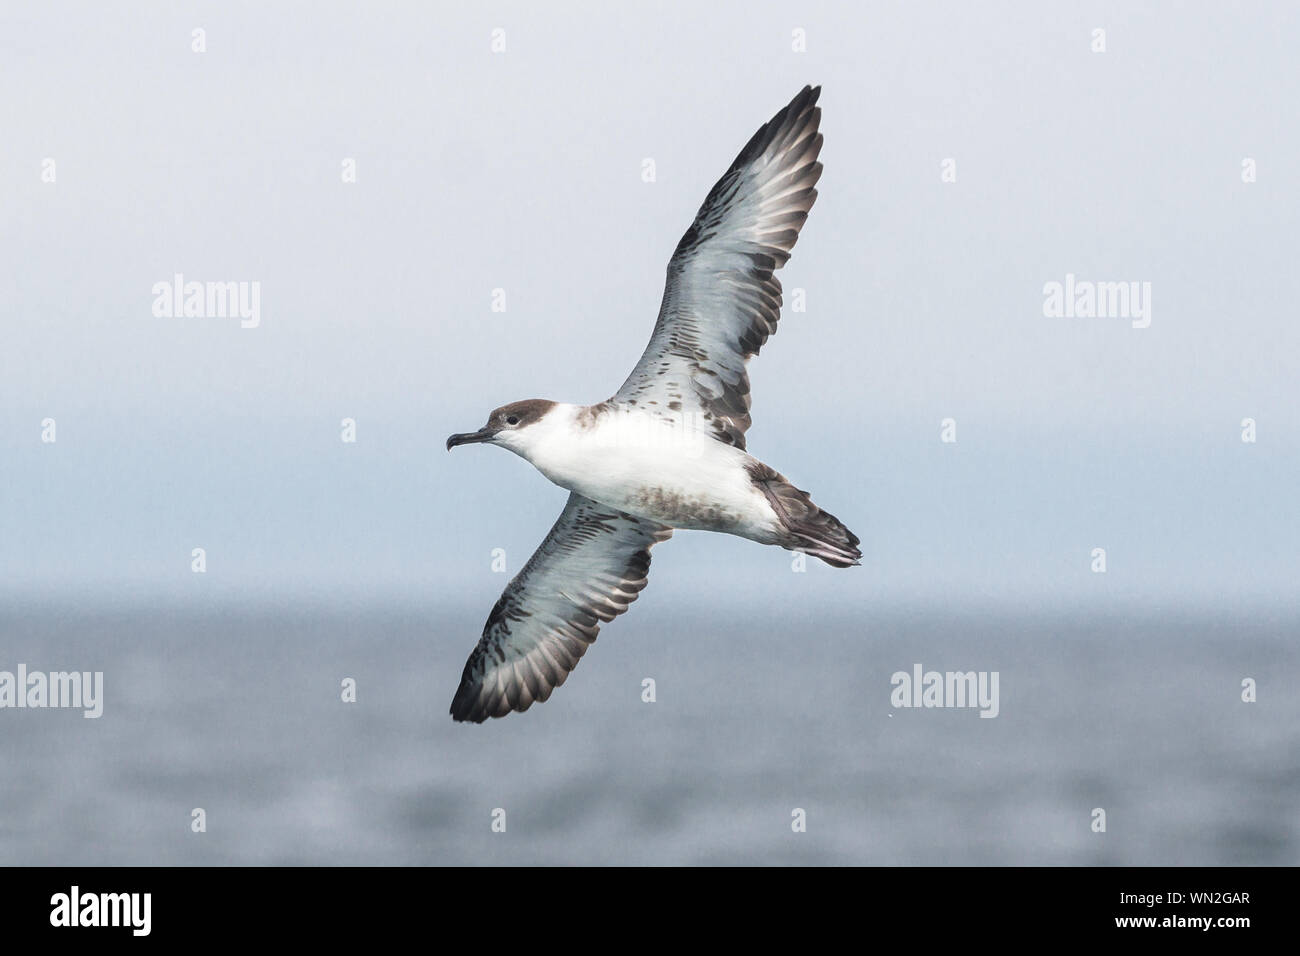 A great shearwater (Ardenna gravis) in flight on a pelagic seabird trip. Stock Photo